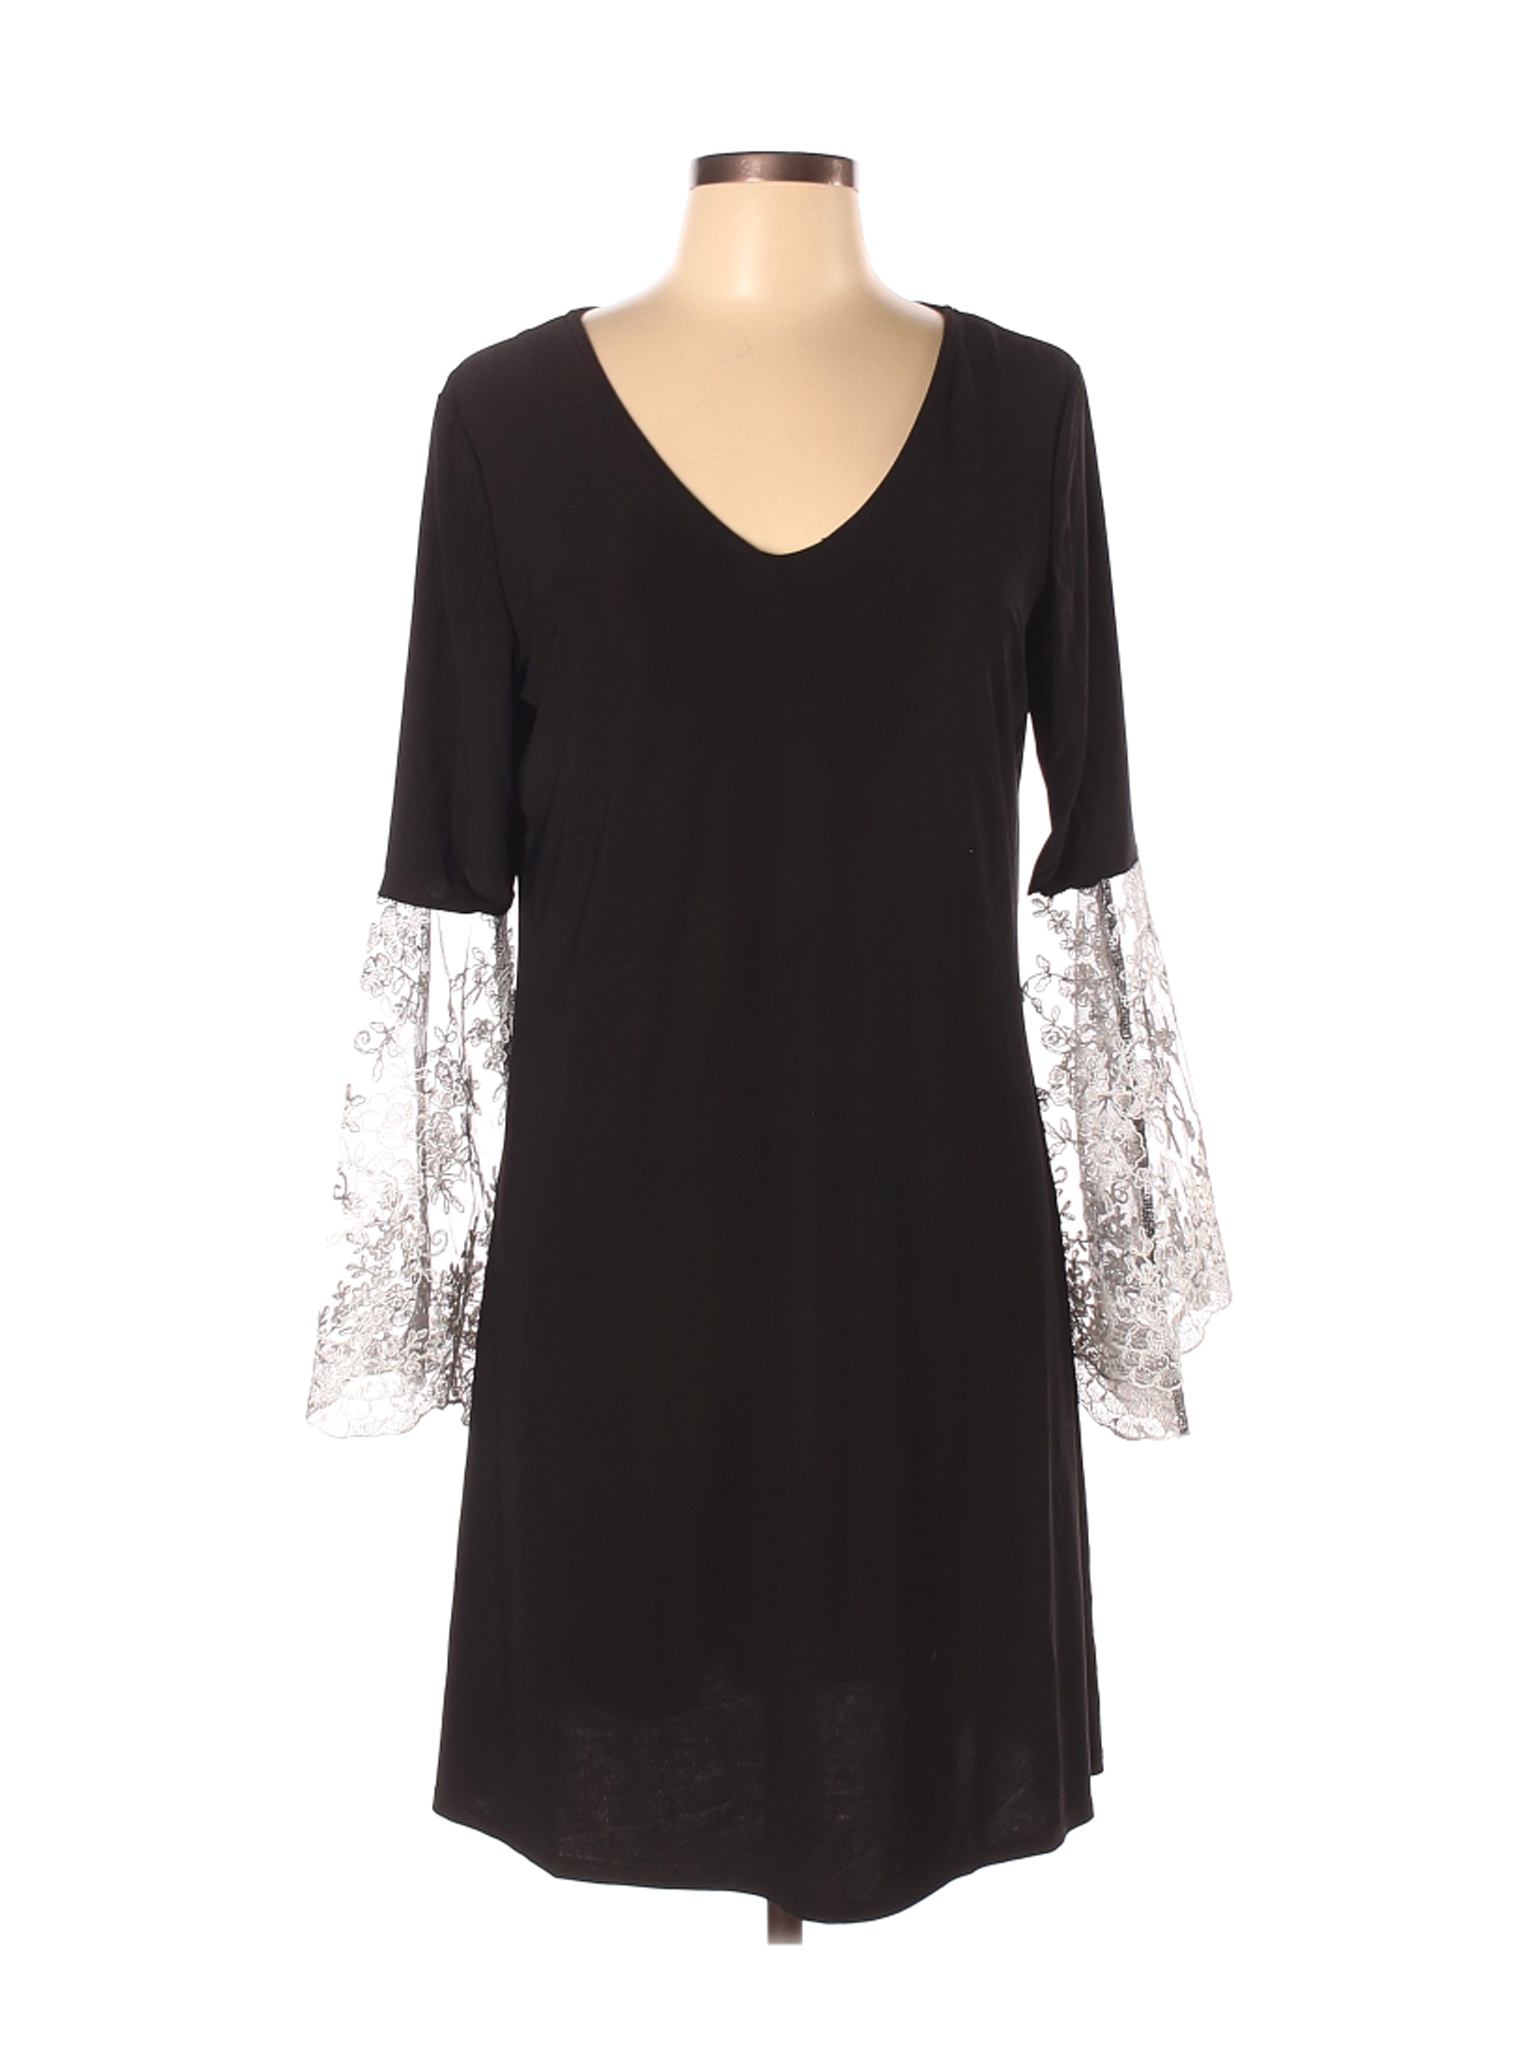 Roz & Ali Women Black Casual Dress L | eBay